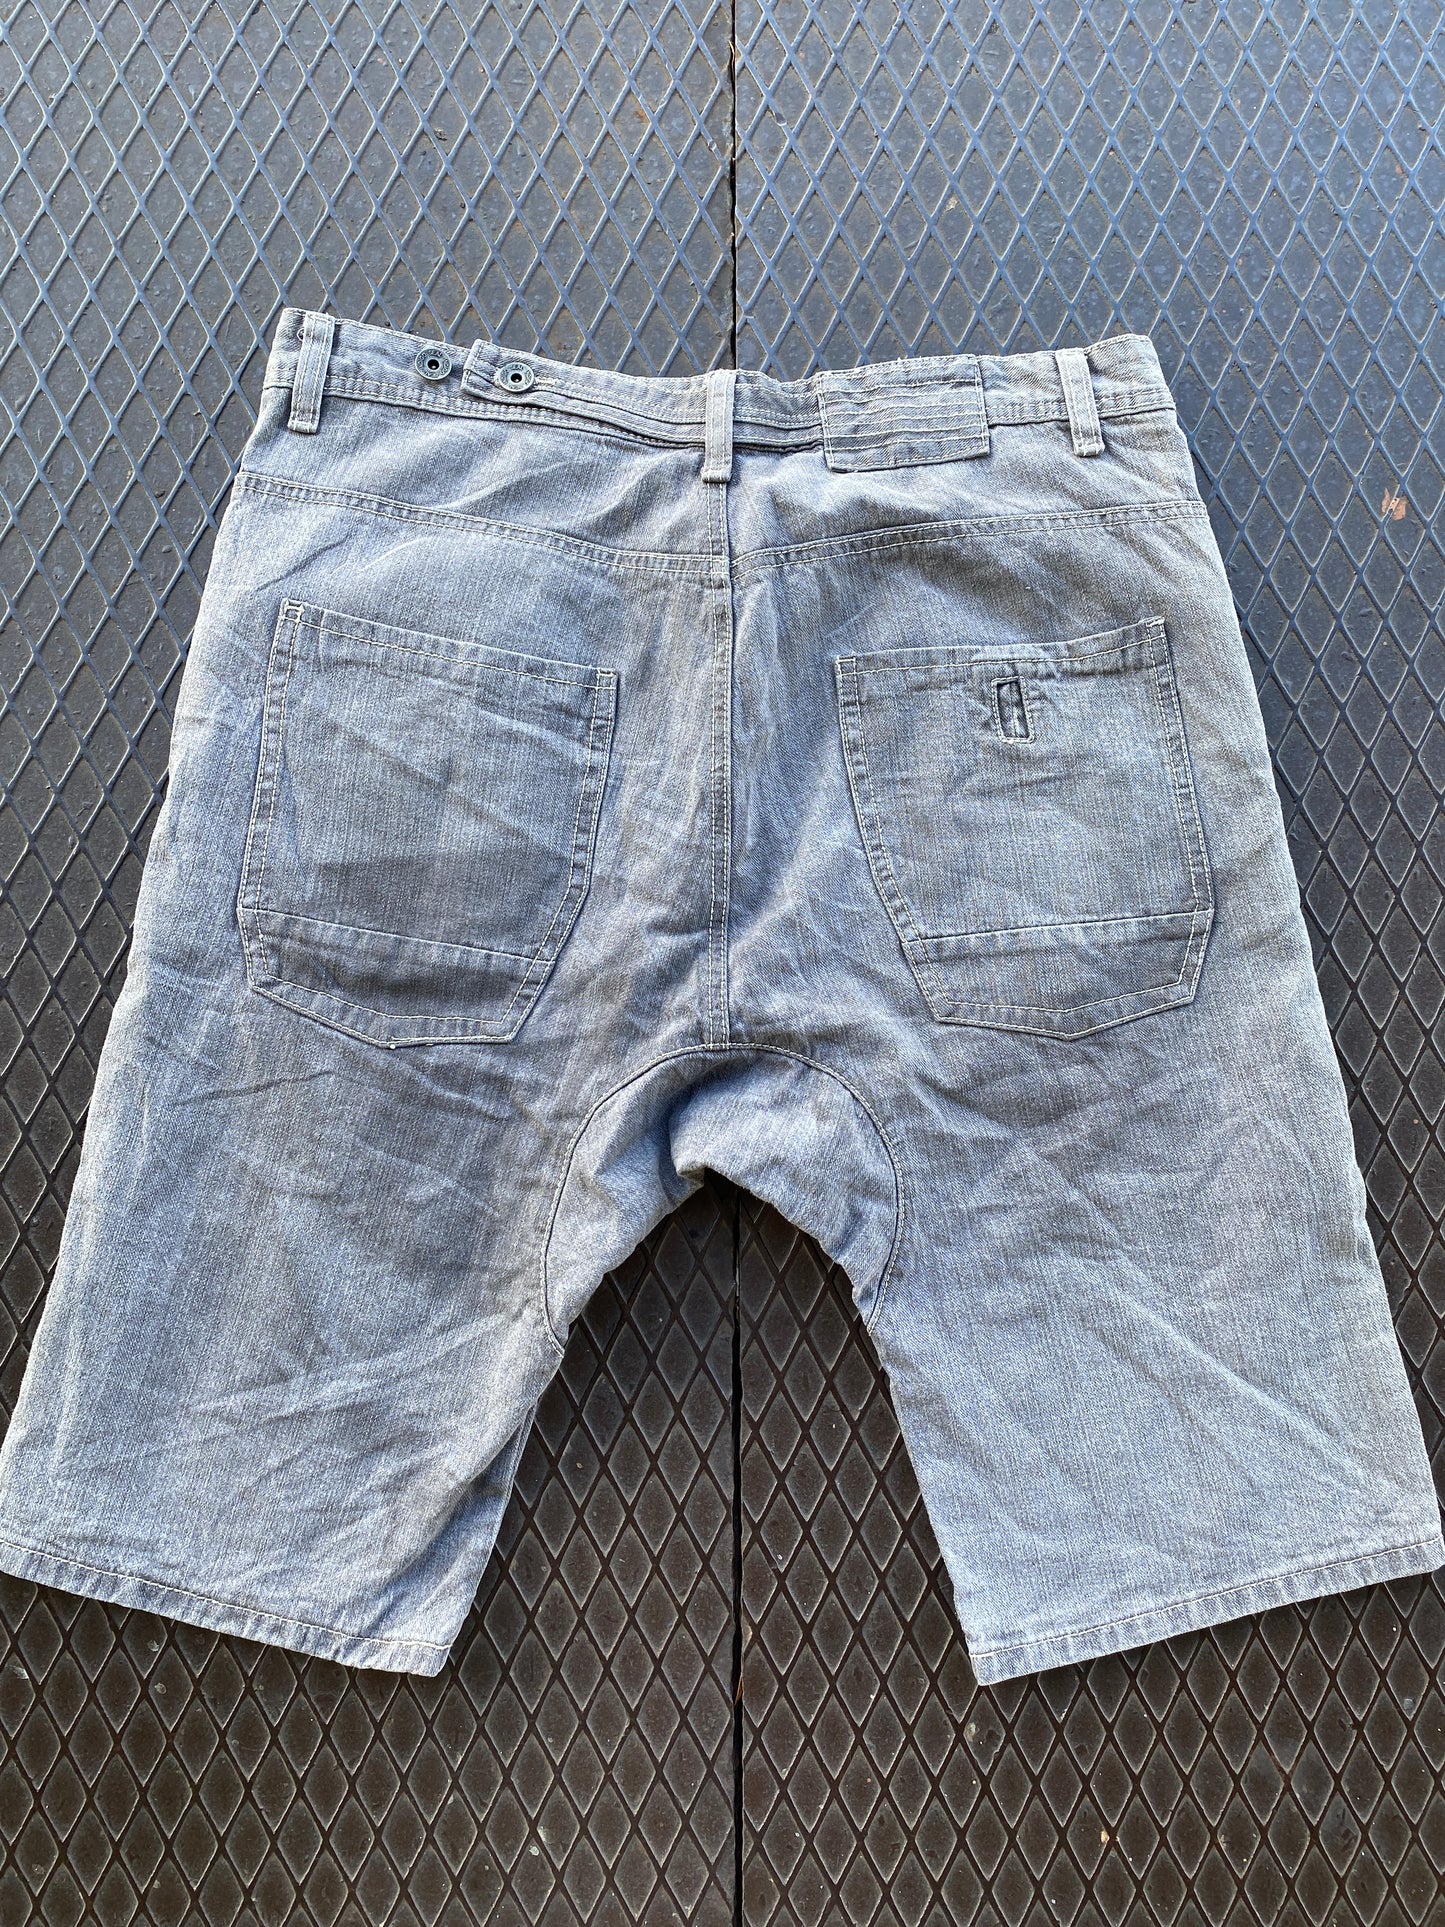 38 - Indigo Seal Grey Wash Denim Carpenter Shorts